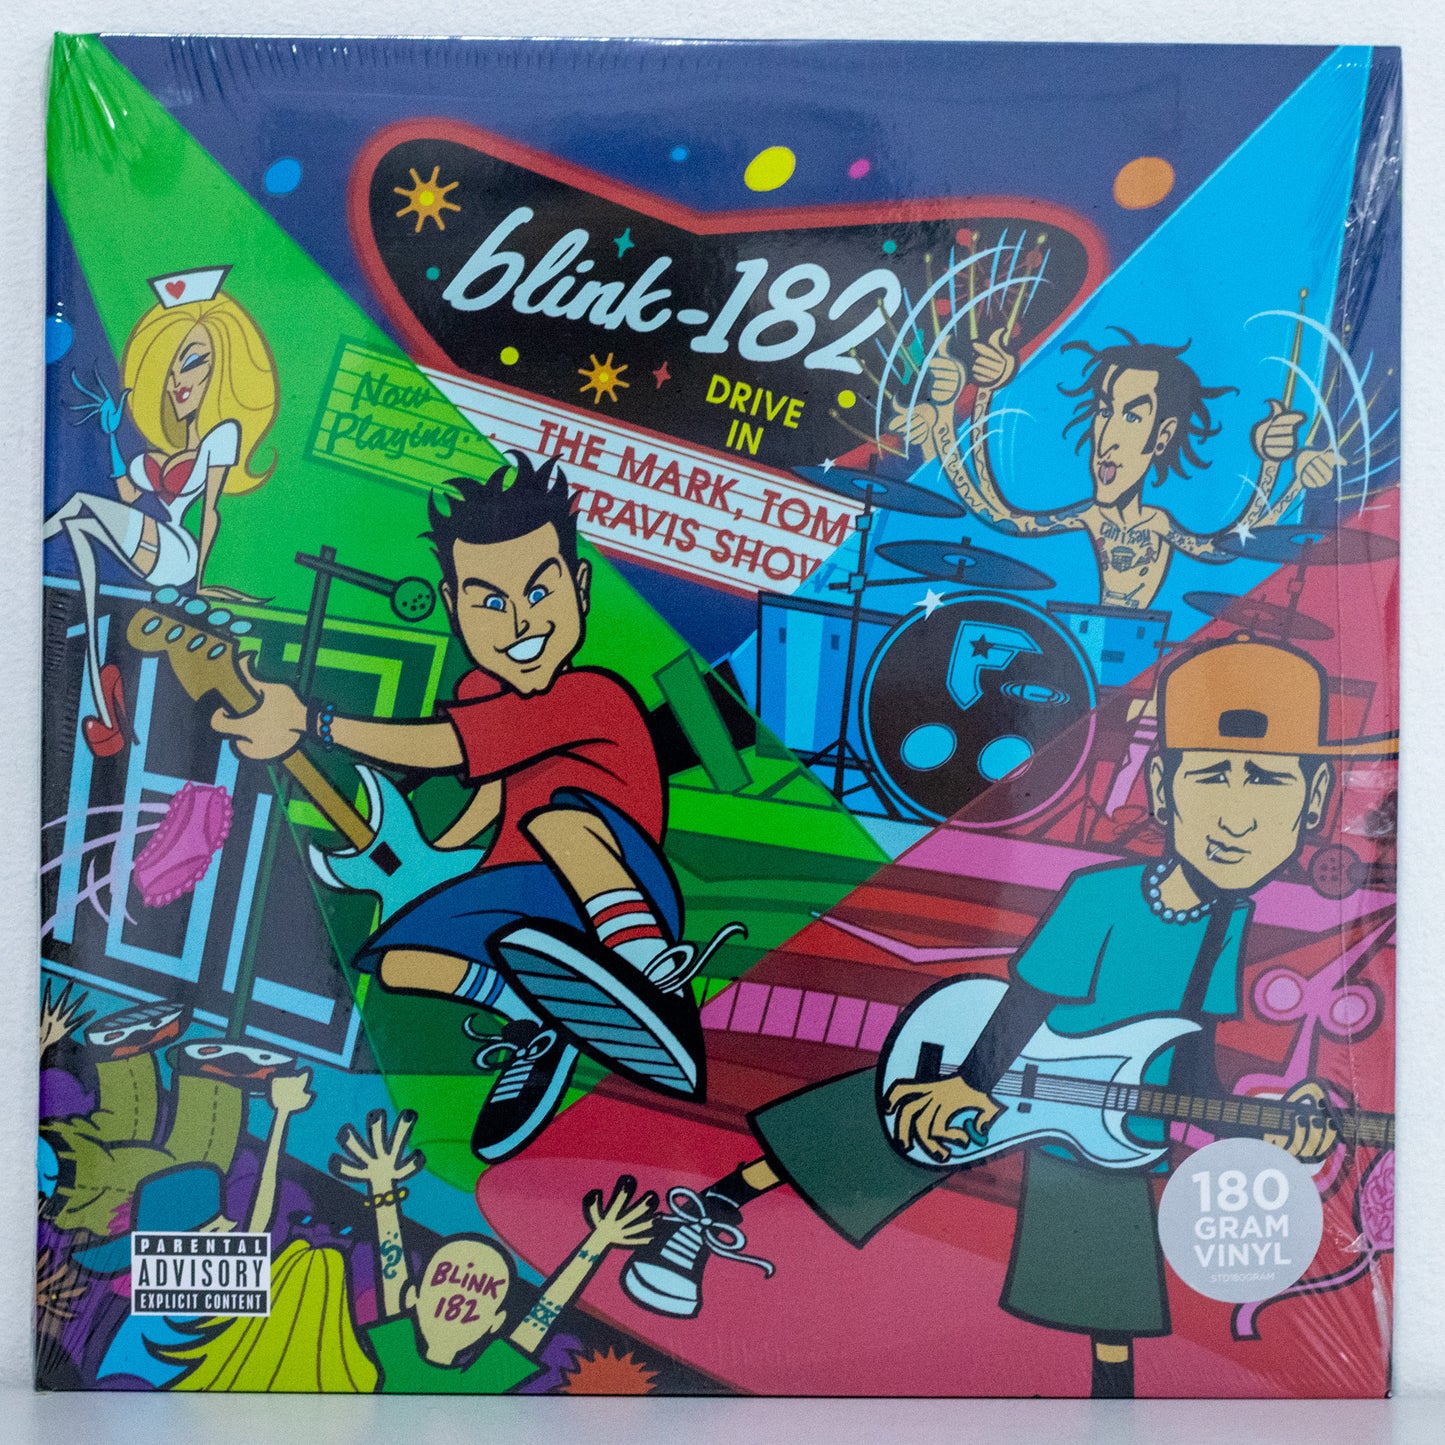 blink-182 - The Mark, Tom, and Travis Show Vinyl